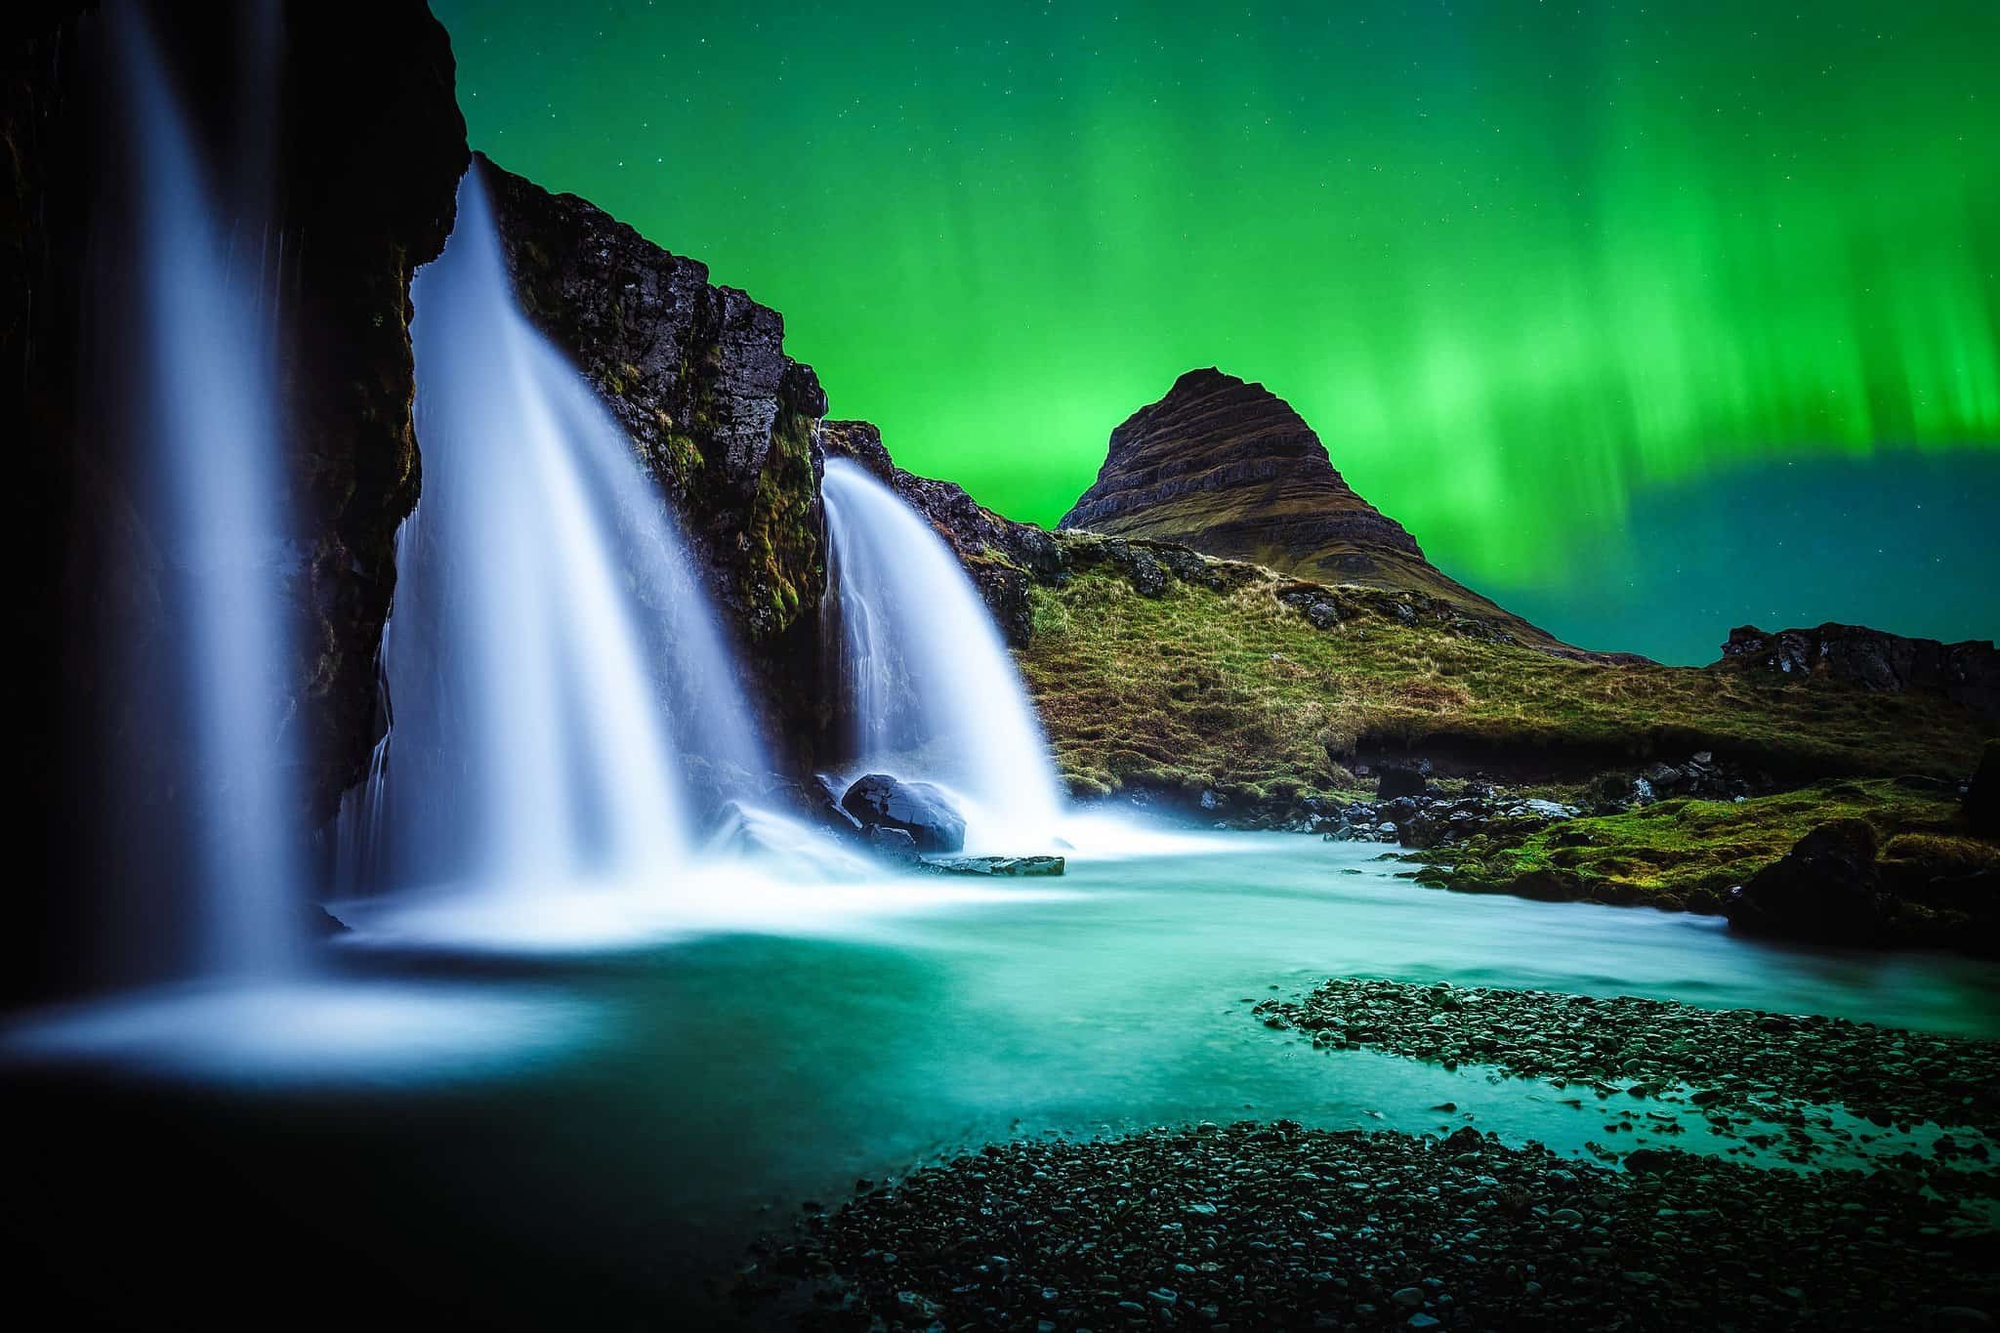 Northern-Lights-in-Iceland-Andrés-Nieto-Porras-via-Flickr-3.jpeg